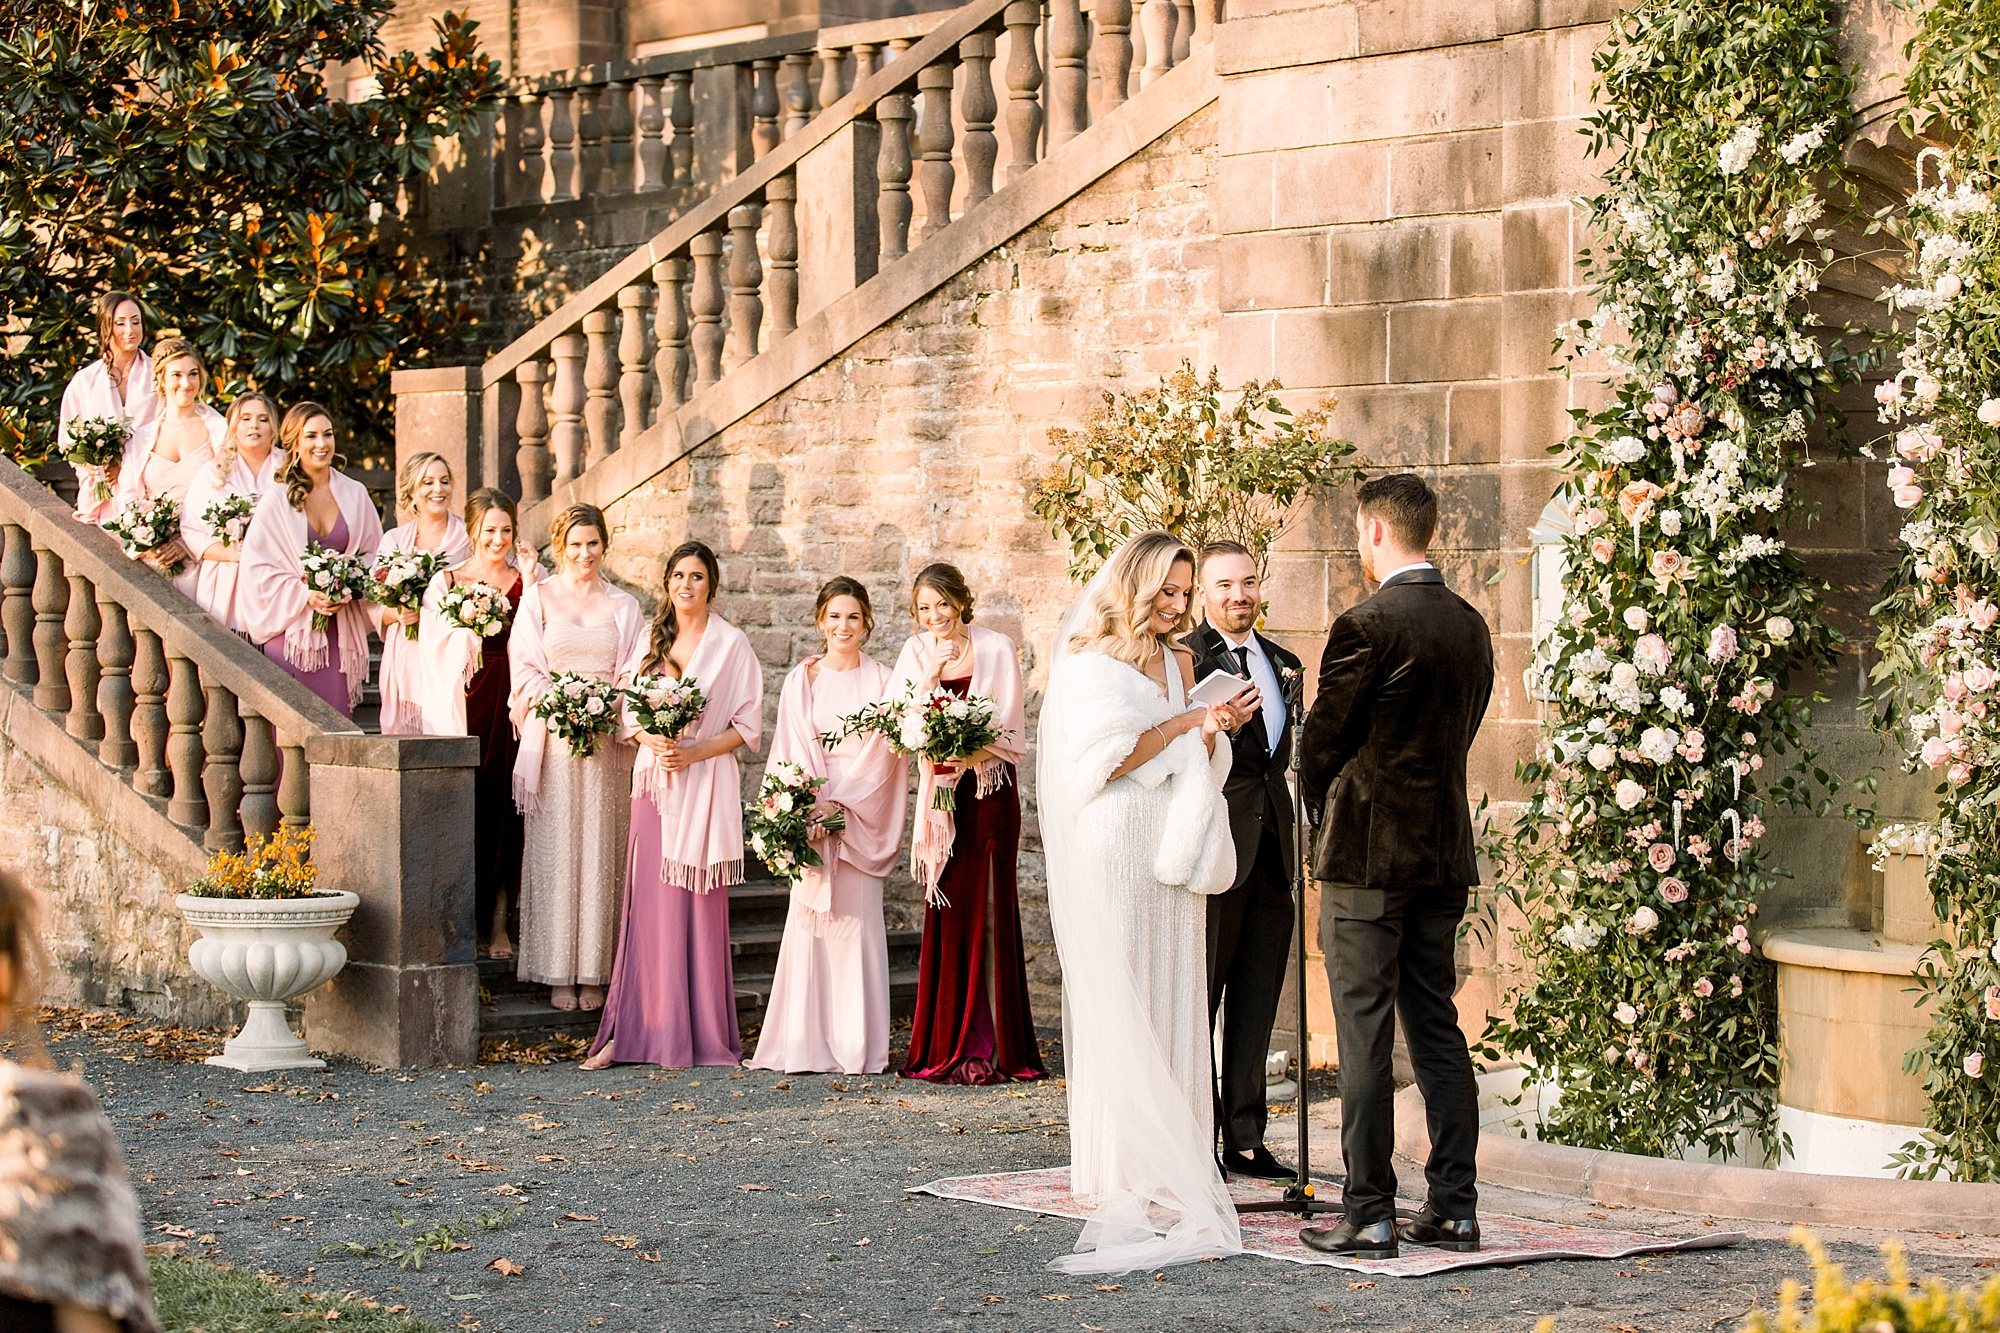 newlyweds exchange vows during Tyler Gardens wedding ceremony in courtyard